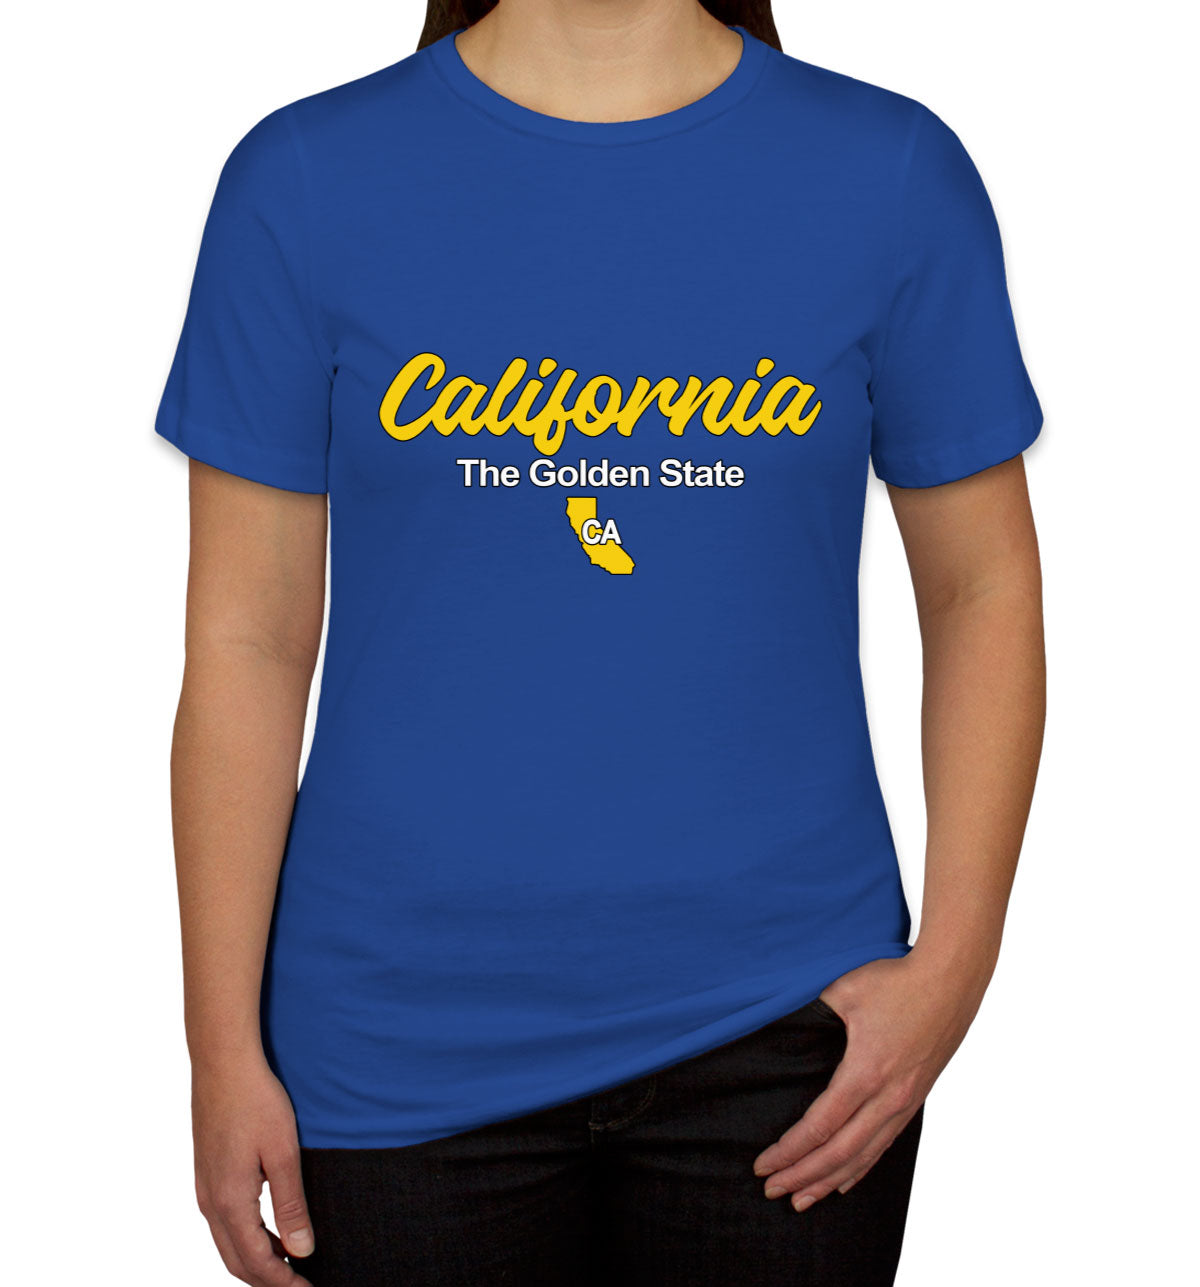 California The Golden State Women's T-shirt